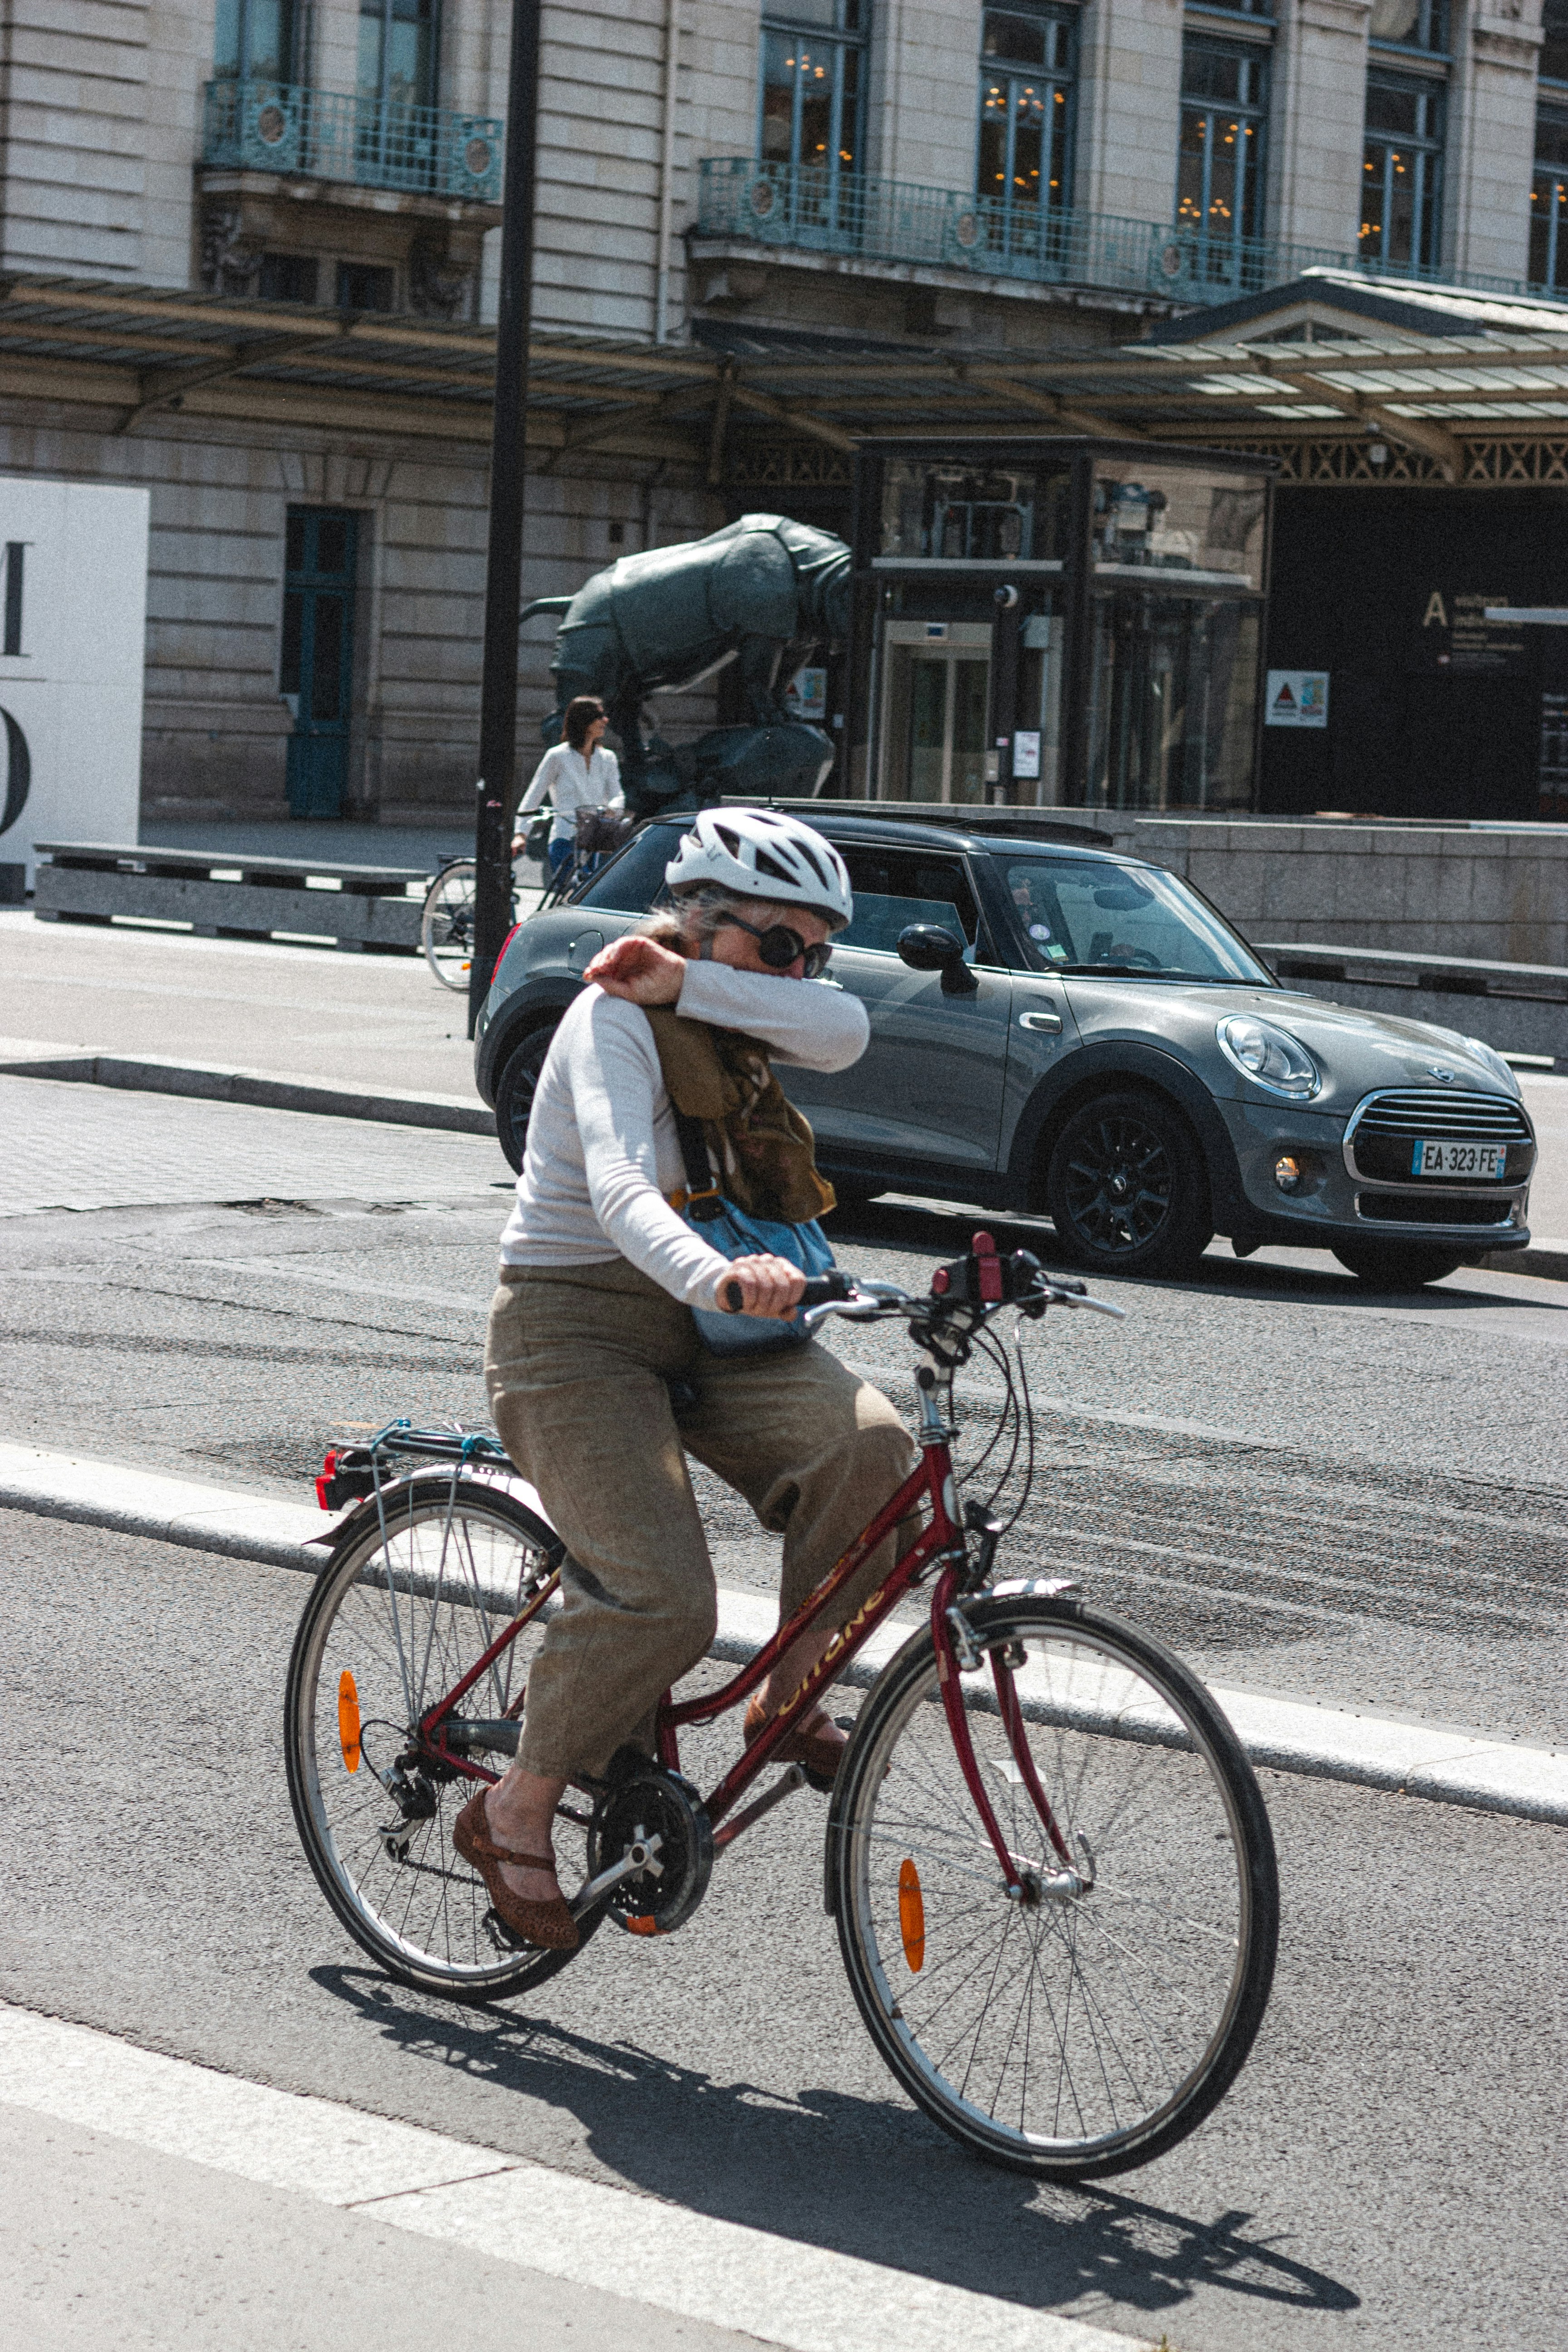 man in brown jacket riding bicycle on road during daytime